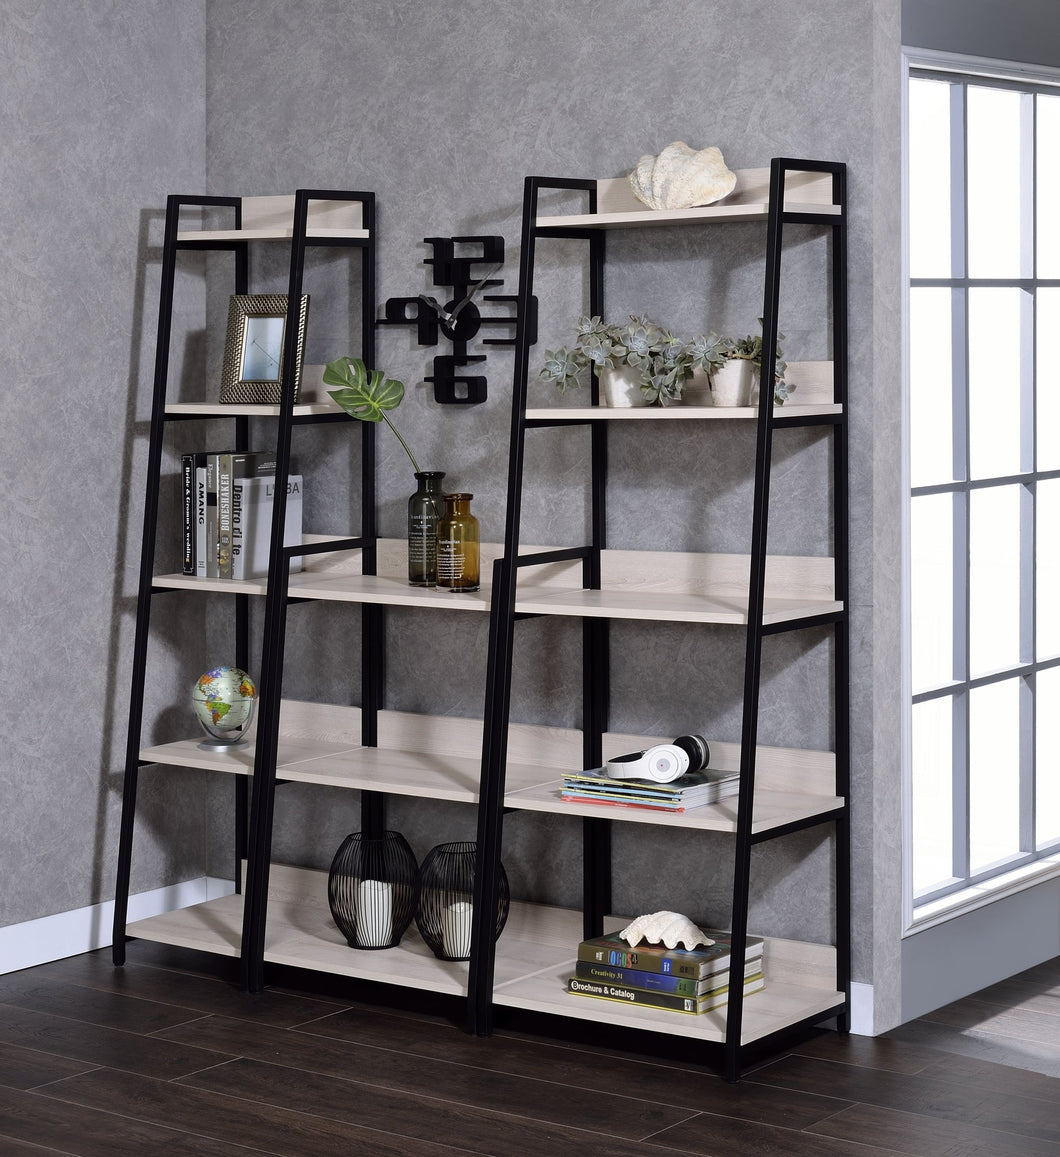 Wendral Bookshelf - Versatile Home